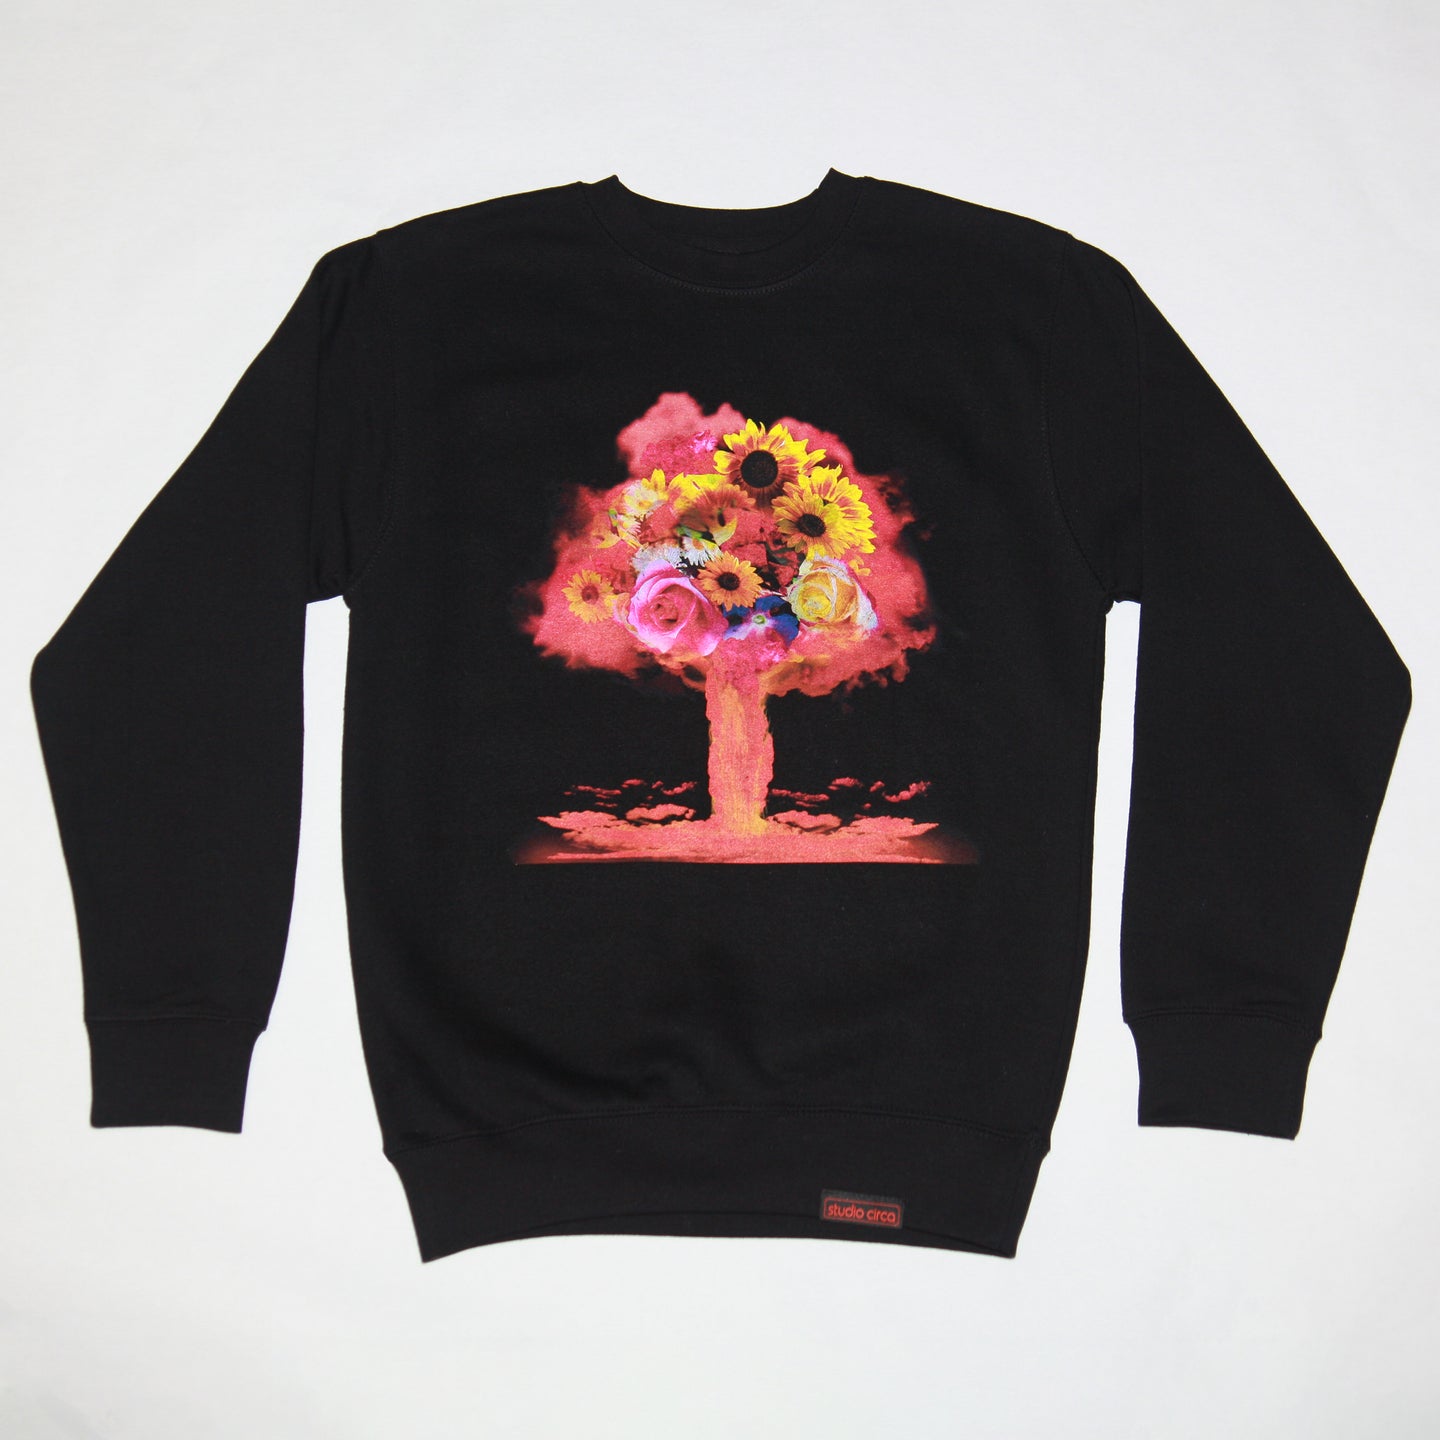 The ATOMIC FLOWER Sweatshirt